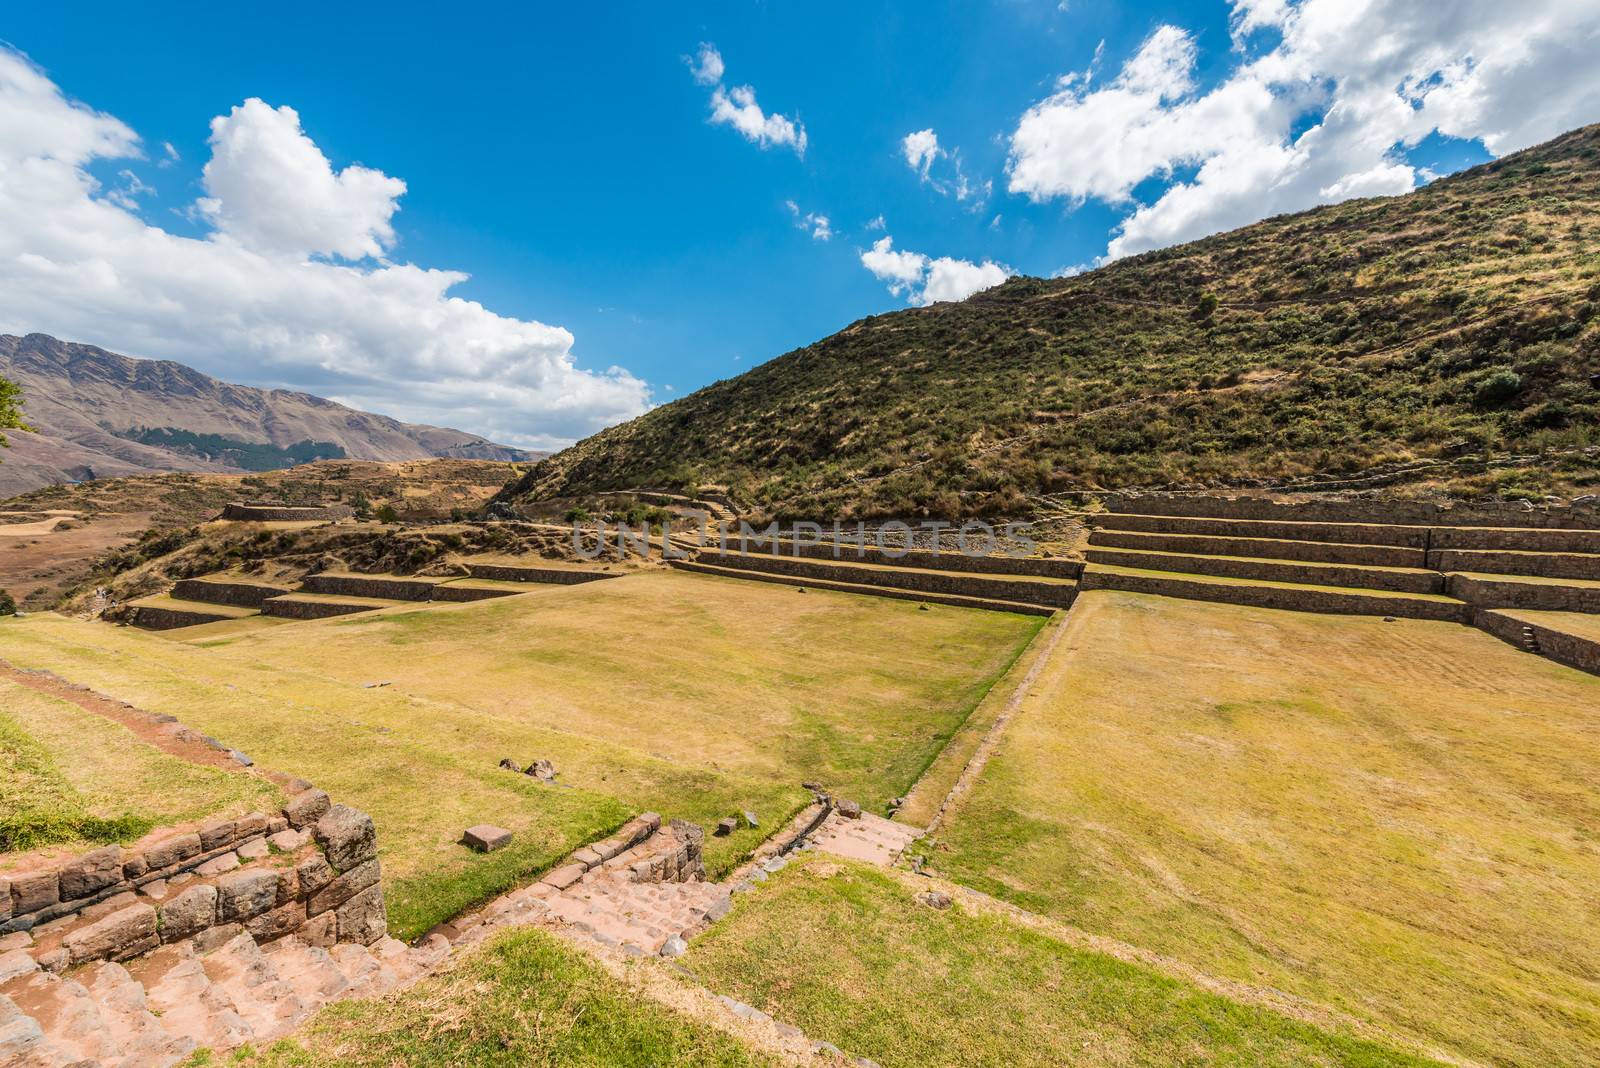 Tipon, Incas ruins in the peruvian Andes at Cuzco Peru